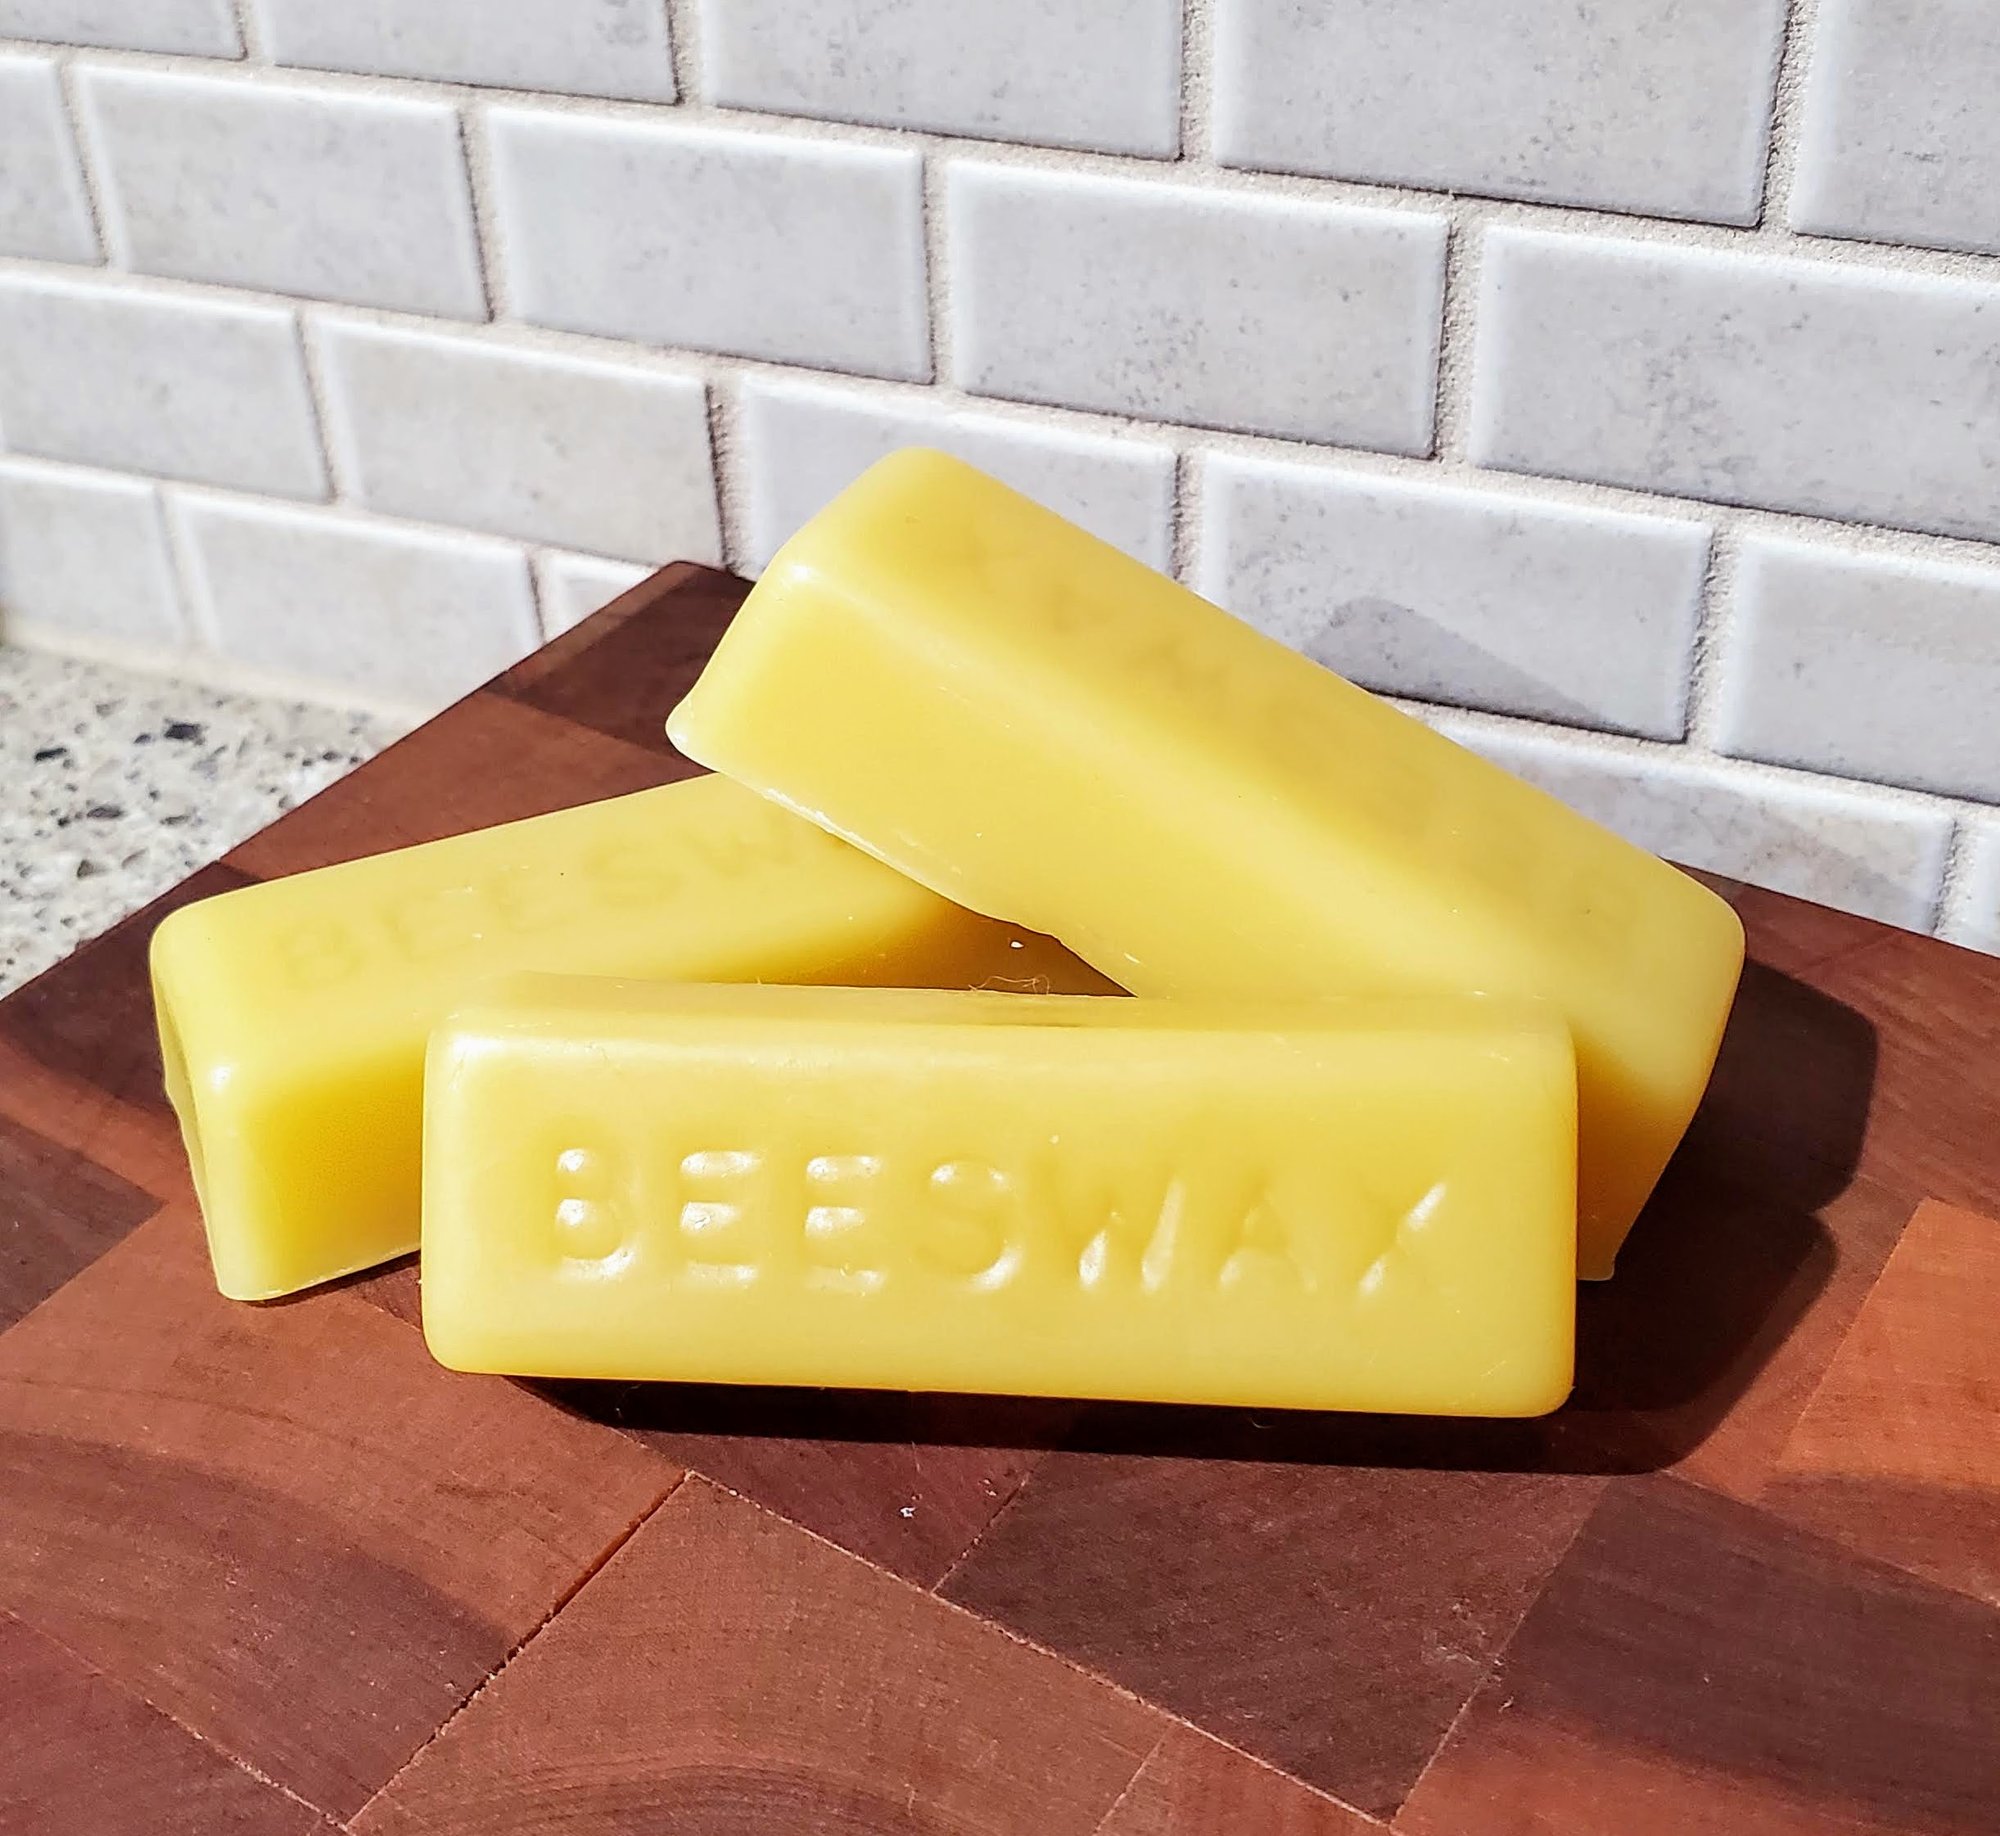 BeesWax - 1 oz bar (LIMITED SUPPLY)